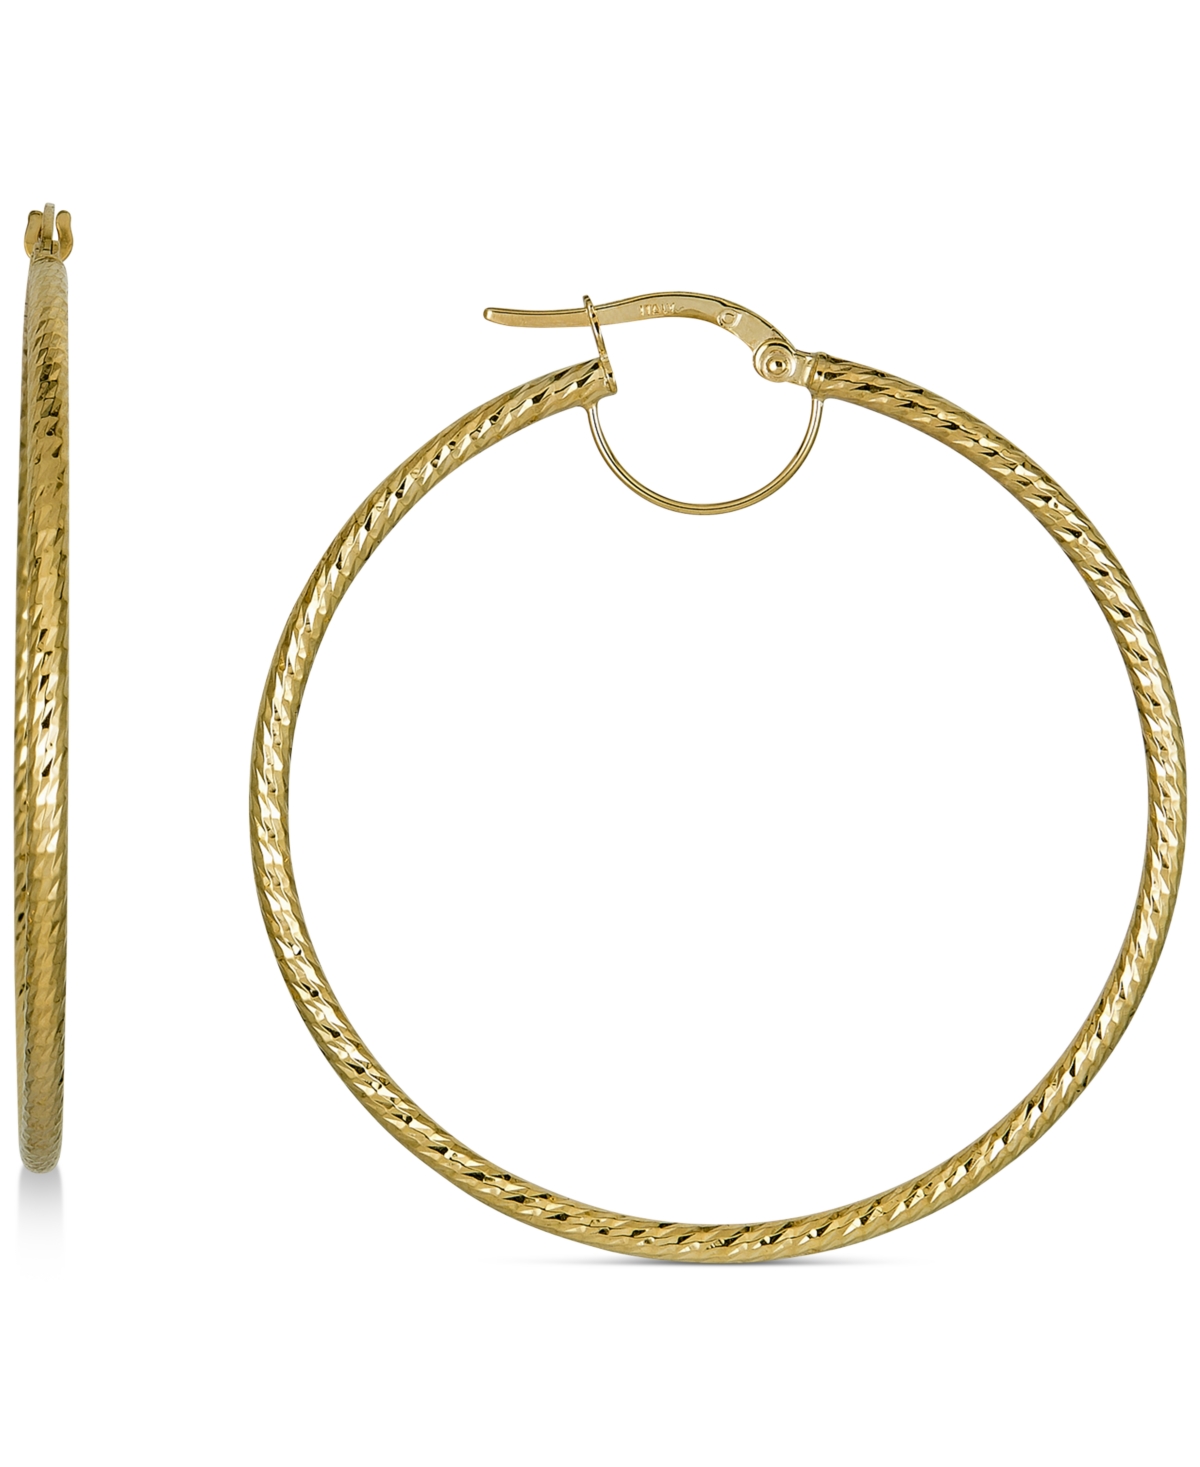 Textured Medium Hoop Earrings in 10k Gold, 40mm - Yellow Gold